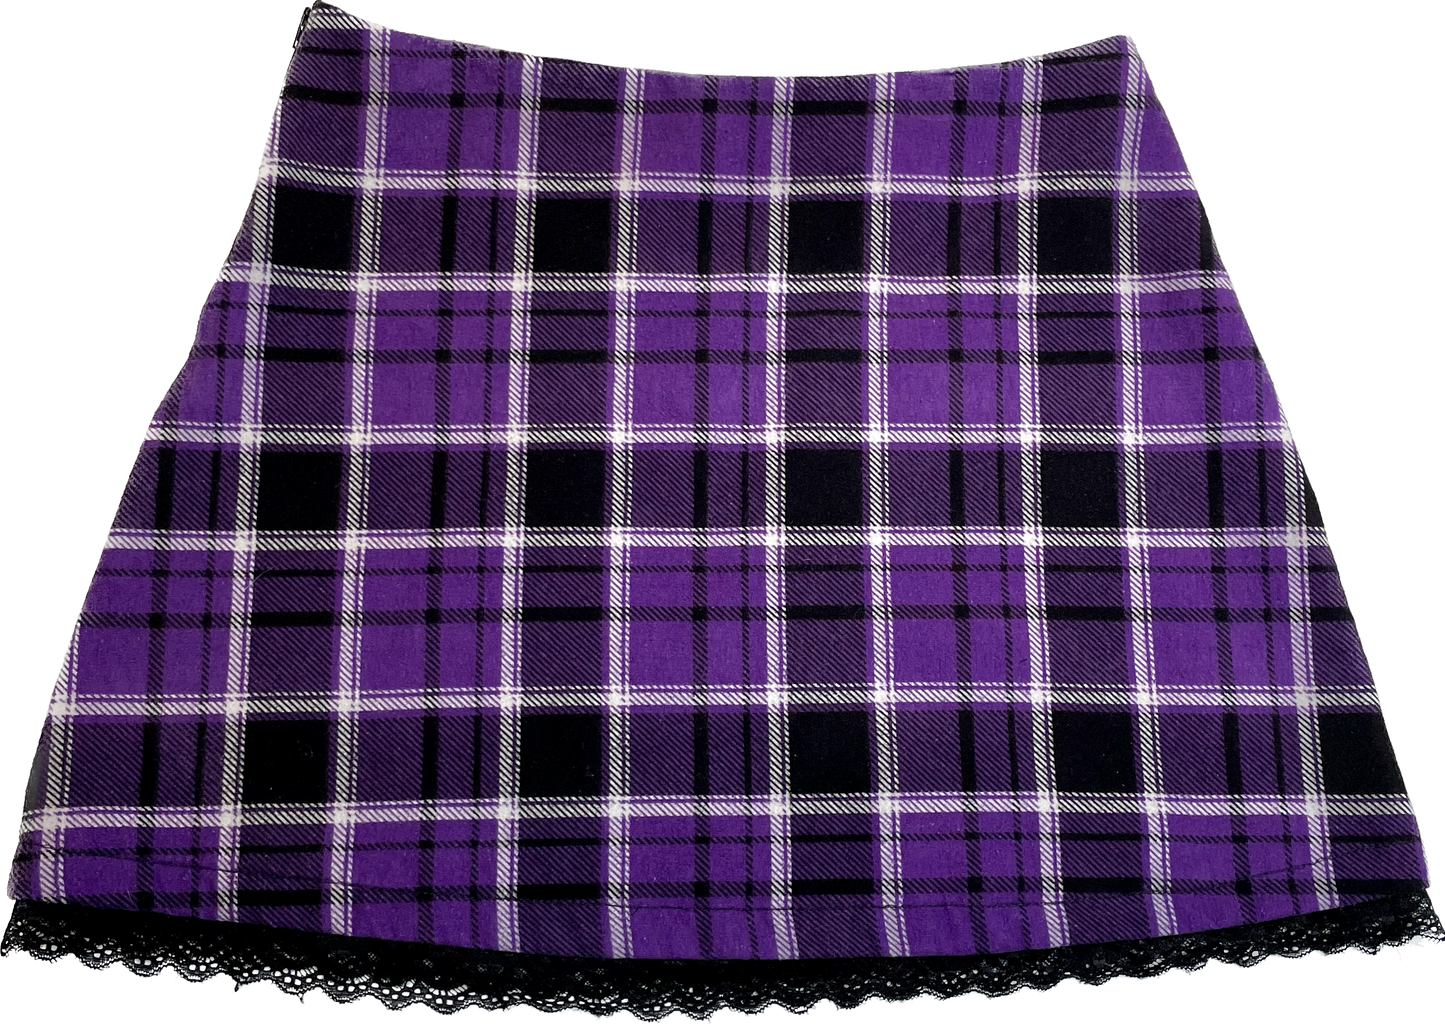 A-Line Plaid Skirt